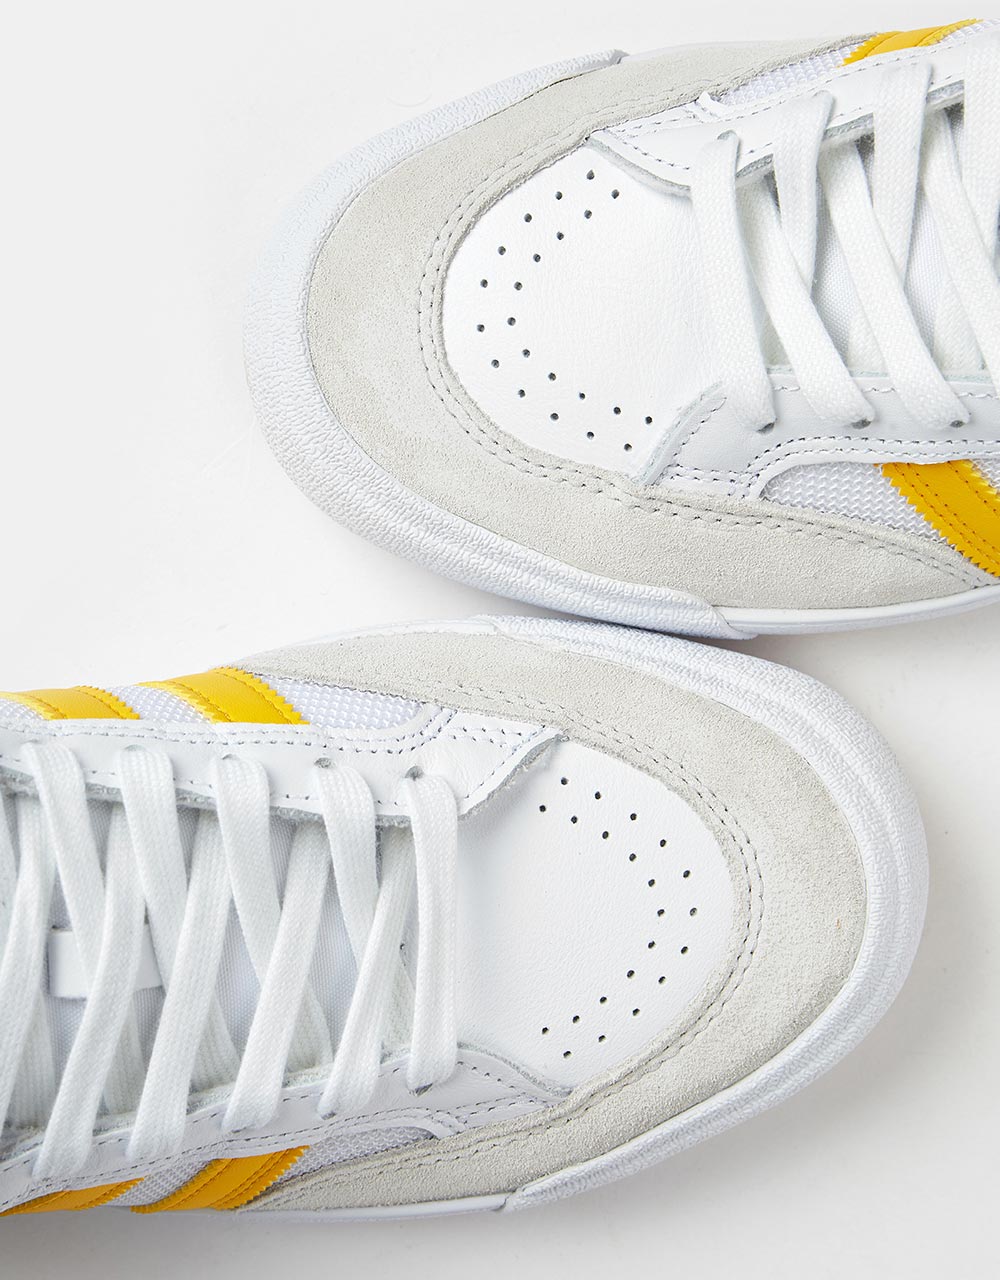 adidas Nora Skate Shoes - White/Bold Gold/Collegiate Navy